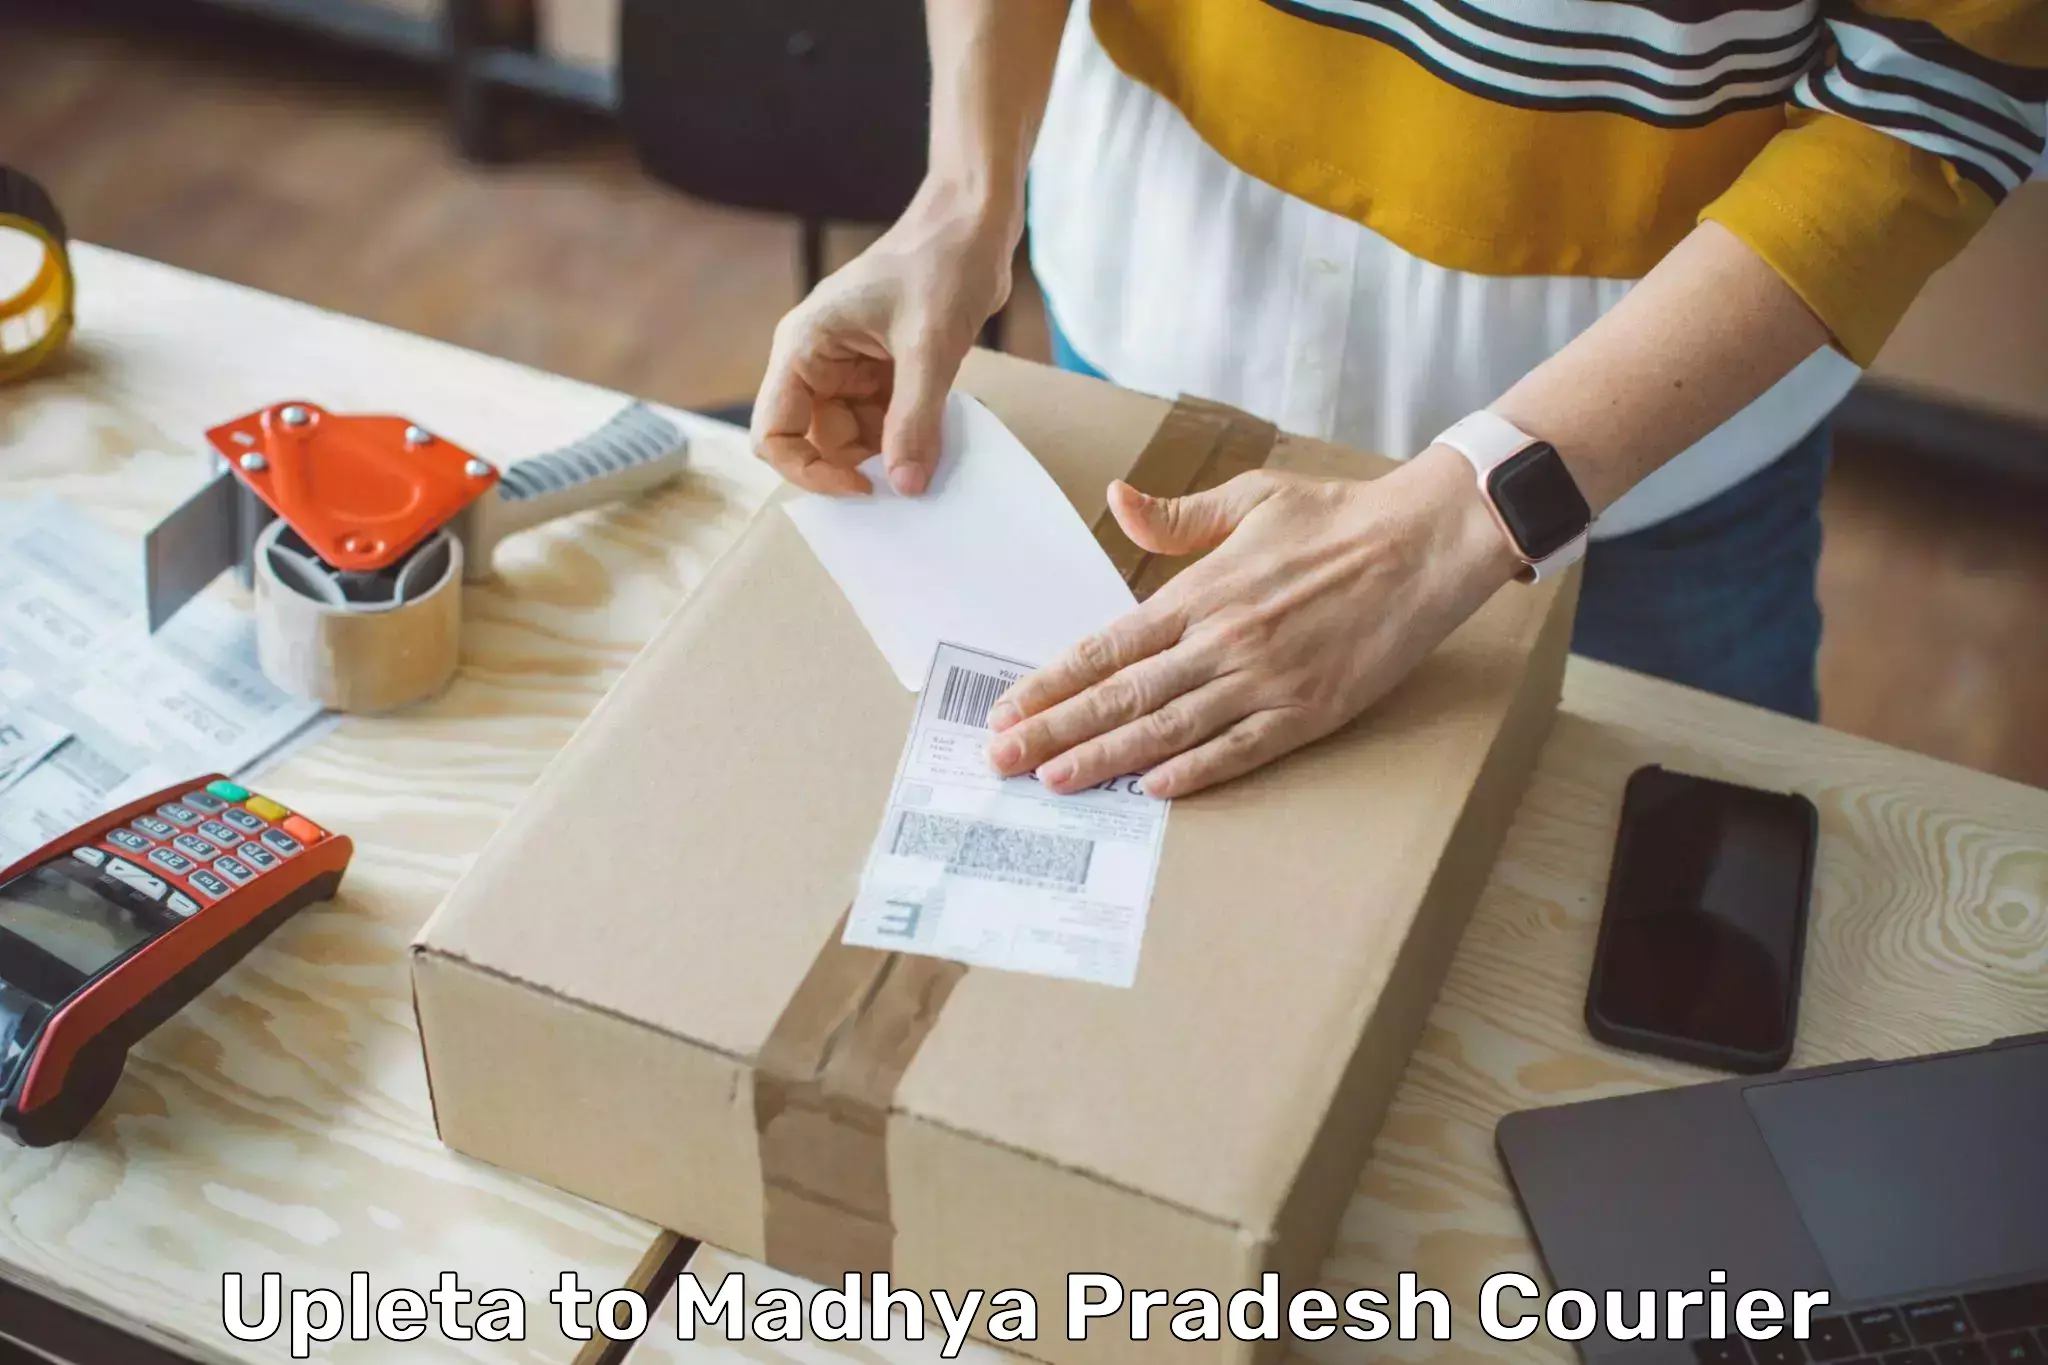 Next-generation courier services Upleta to Khajuraho